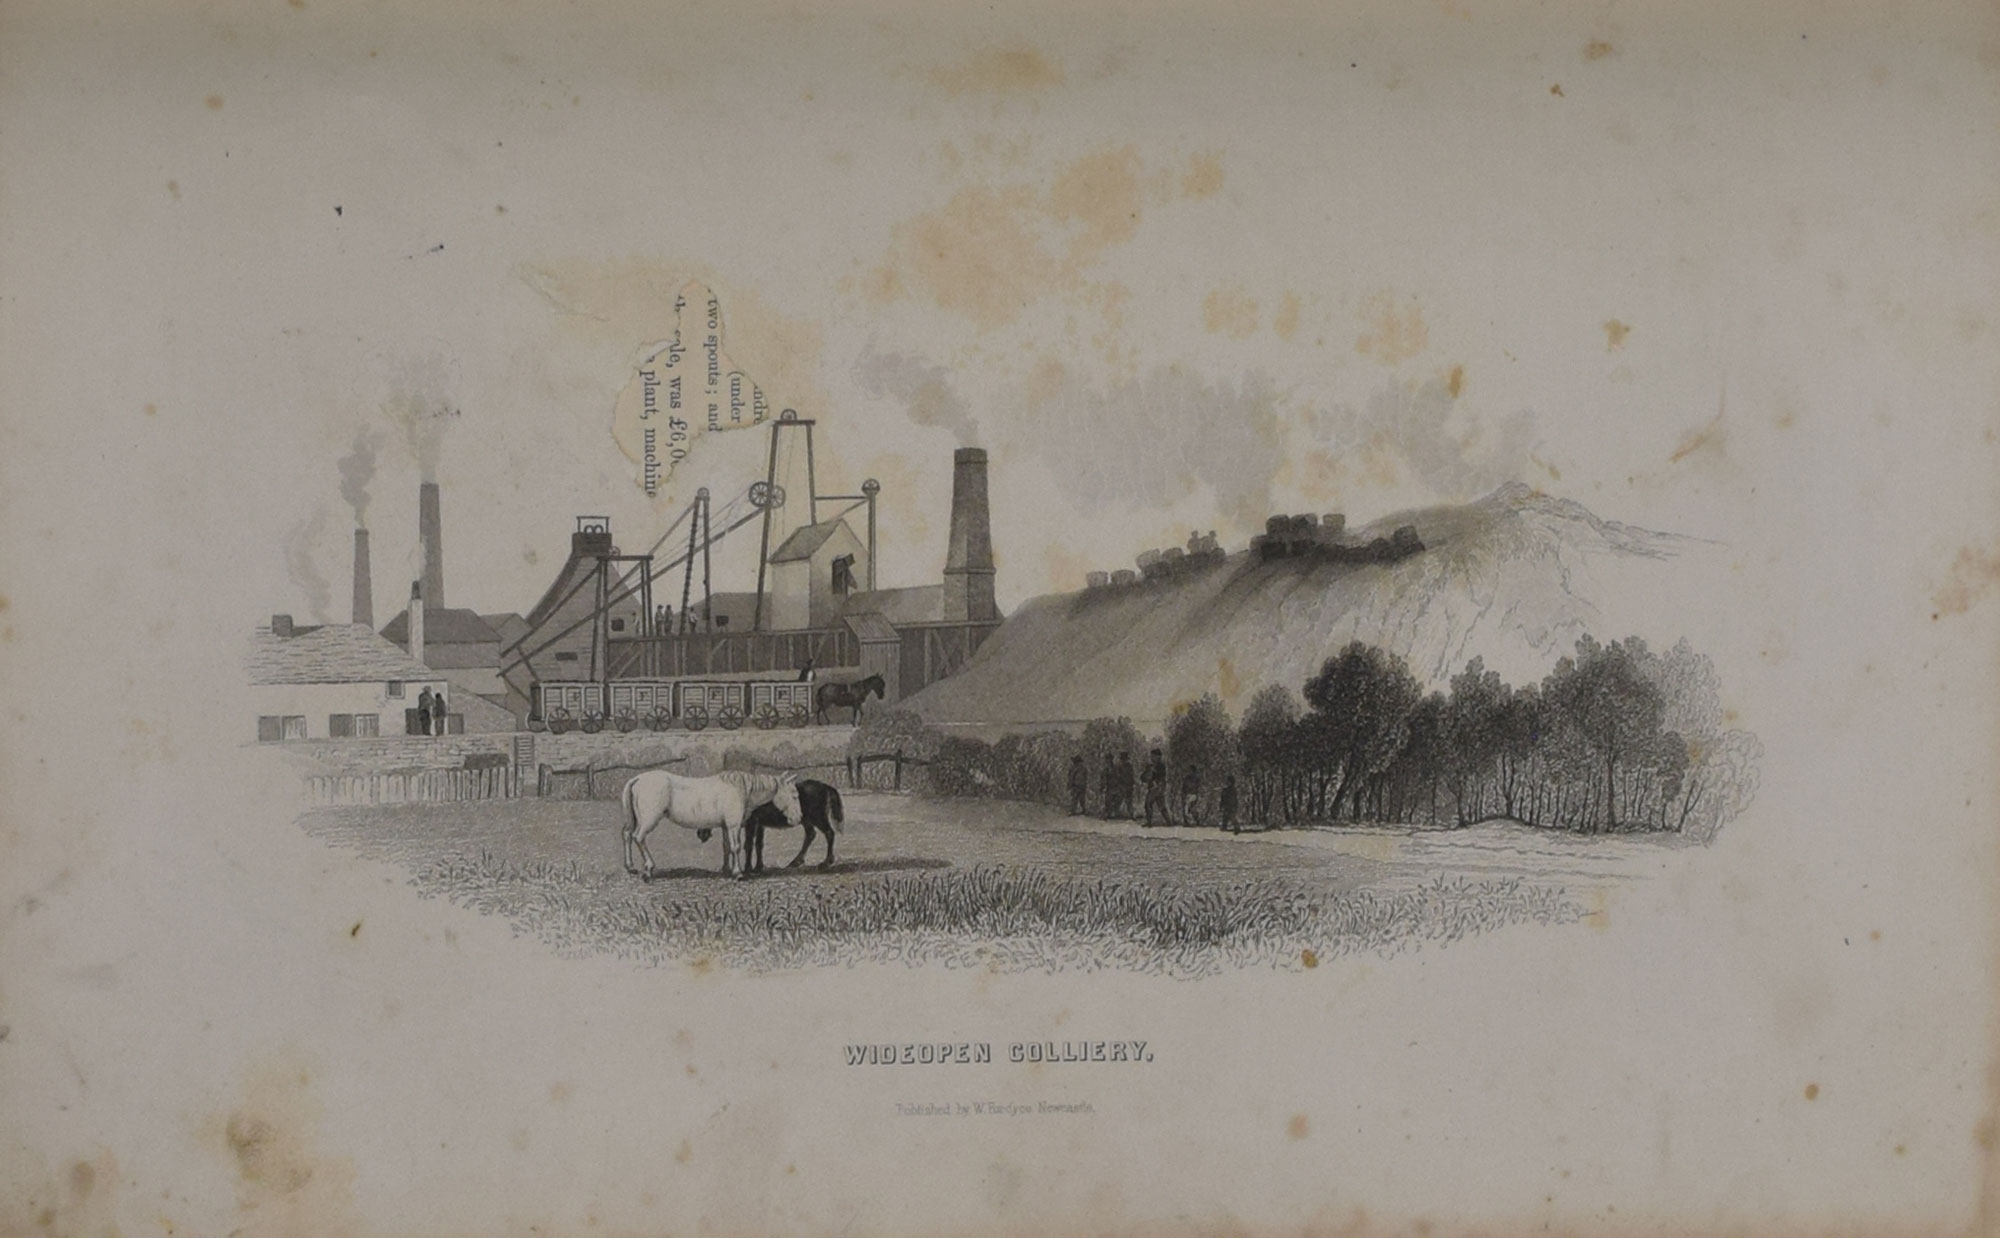 A History of Coal, Coke, Coal Fields, .... of the Great Northern Coal Field